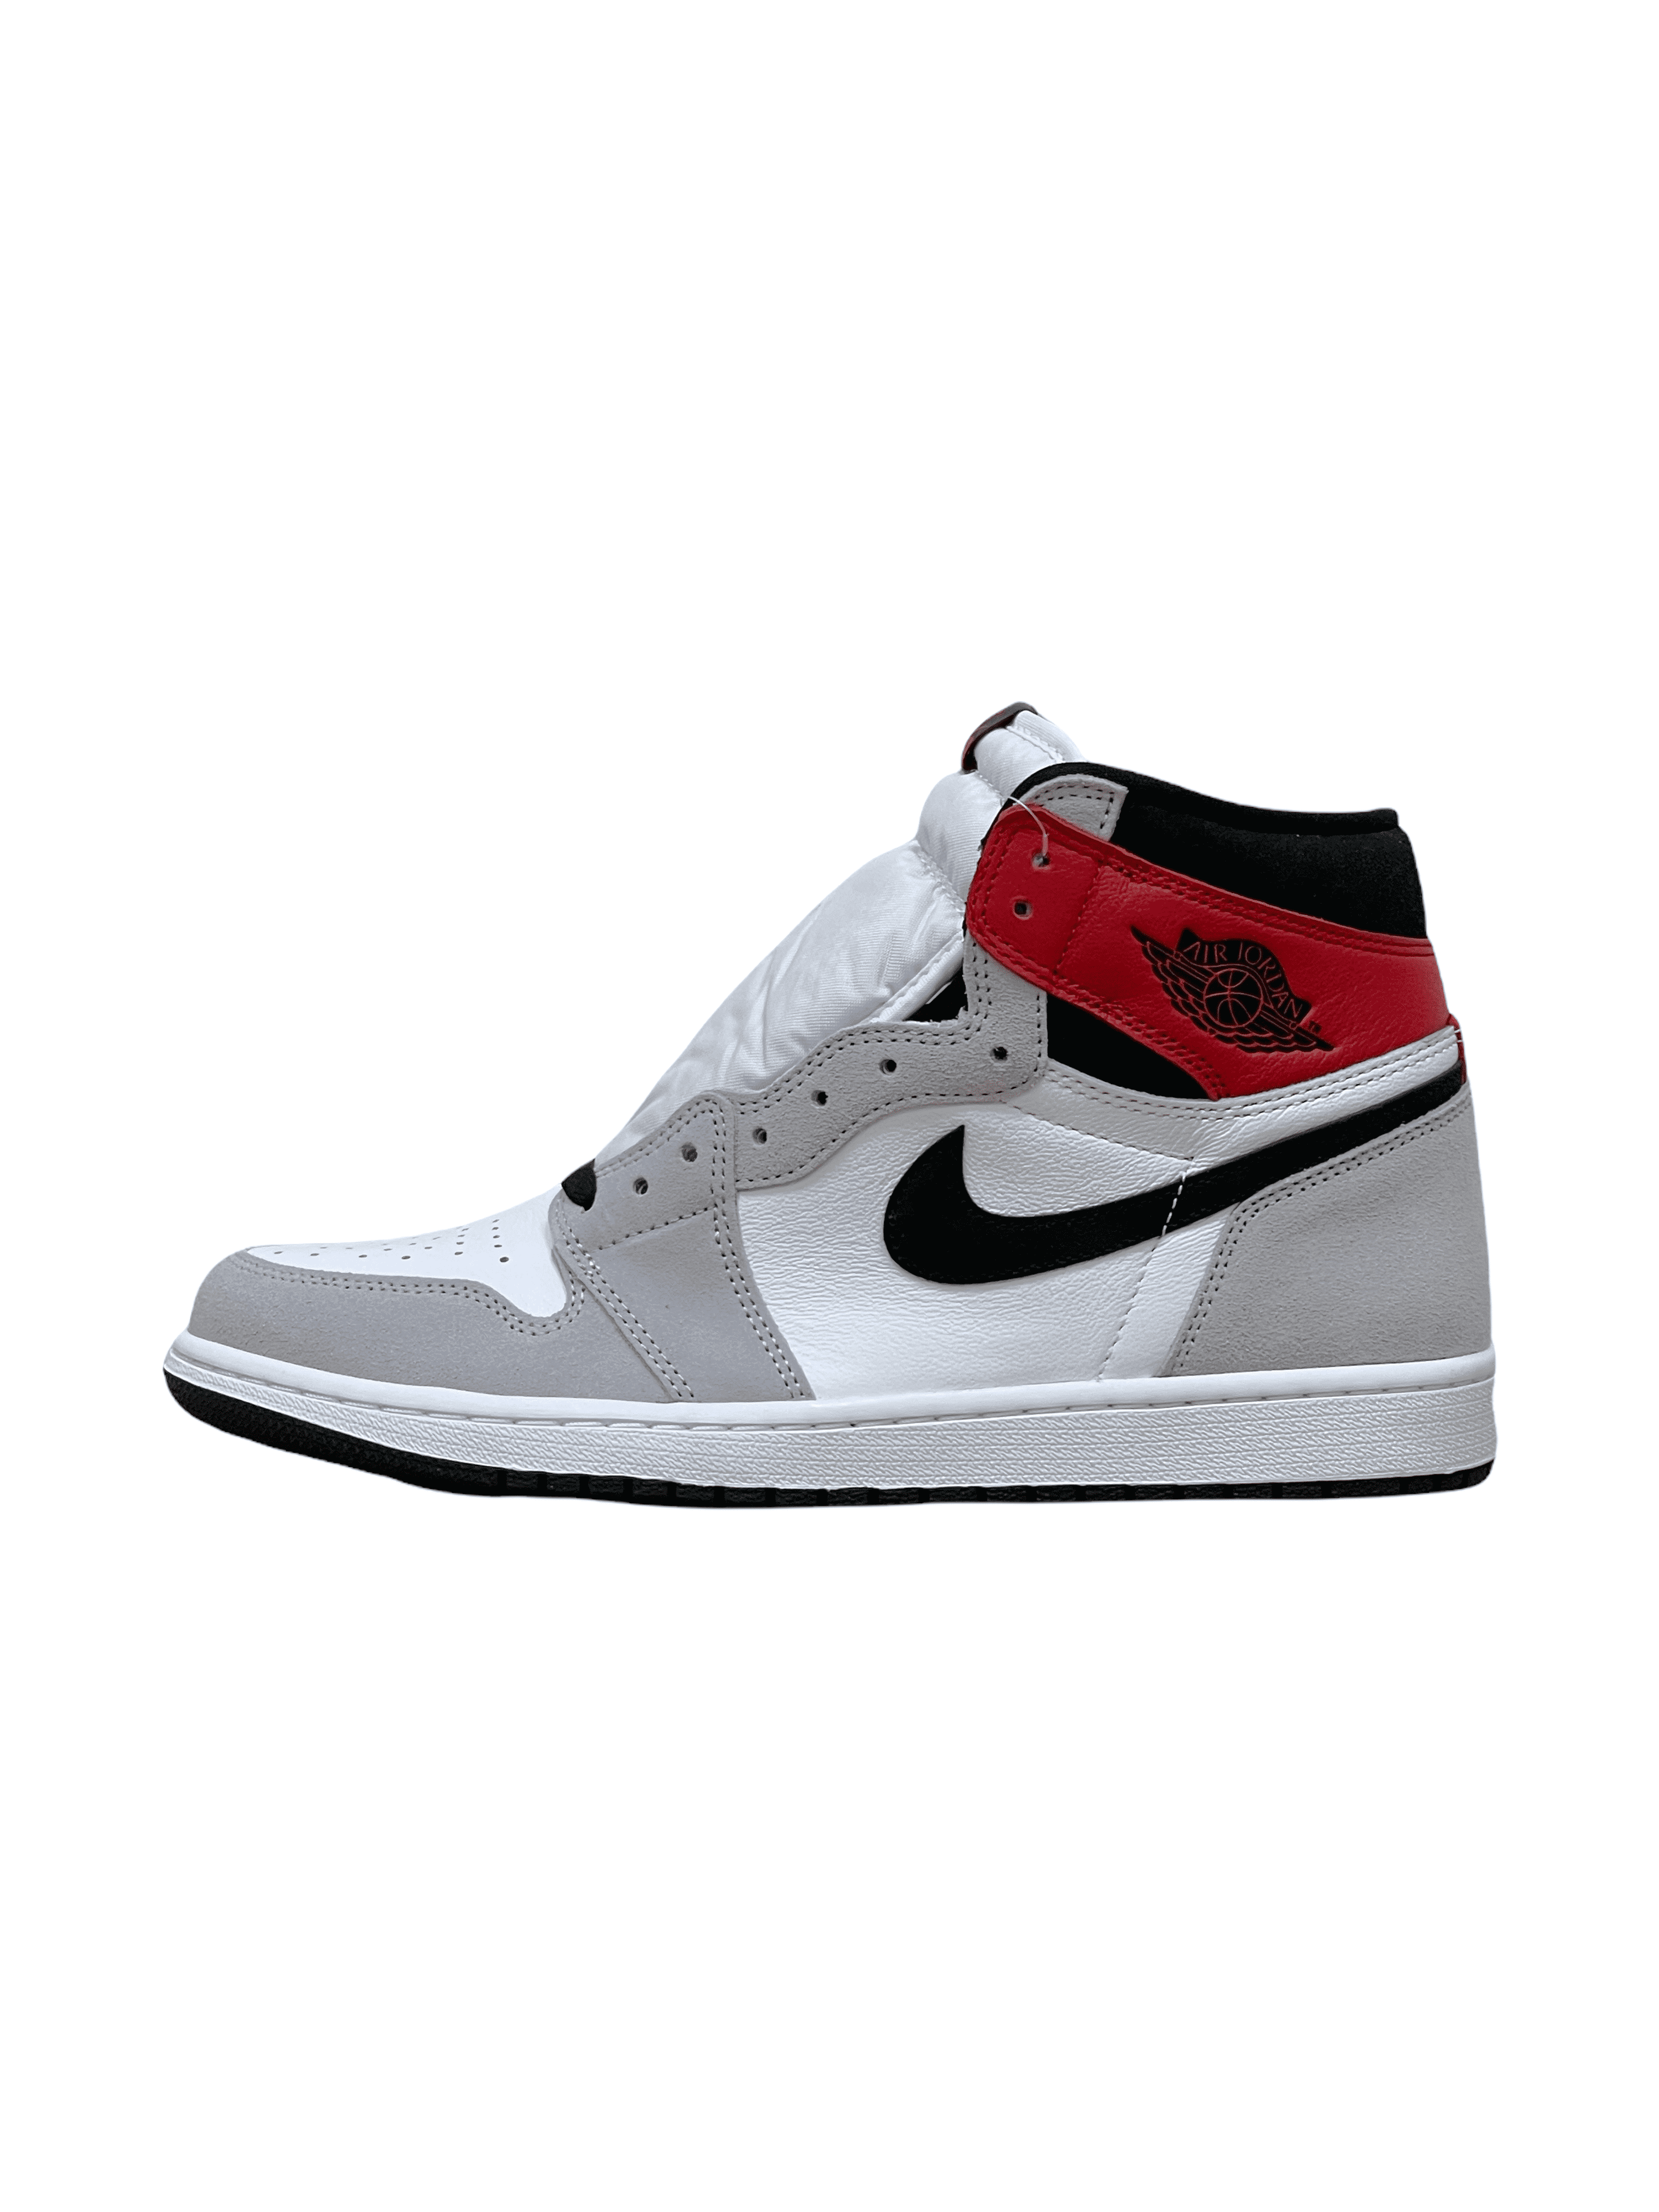 Nike Air Jordan 1 Retro High Light Smoke Grey Sneakers